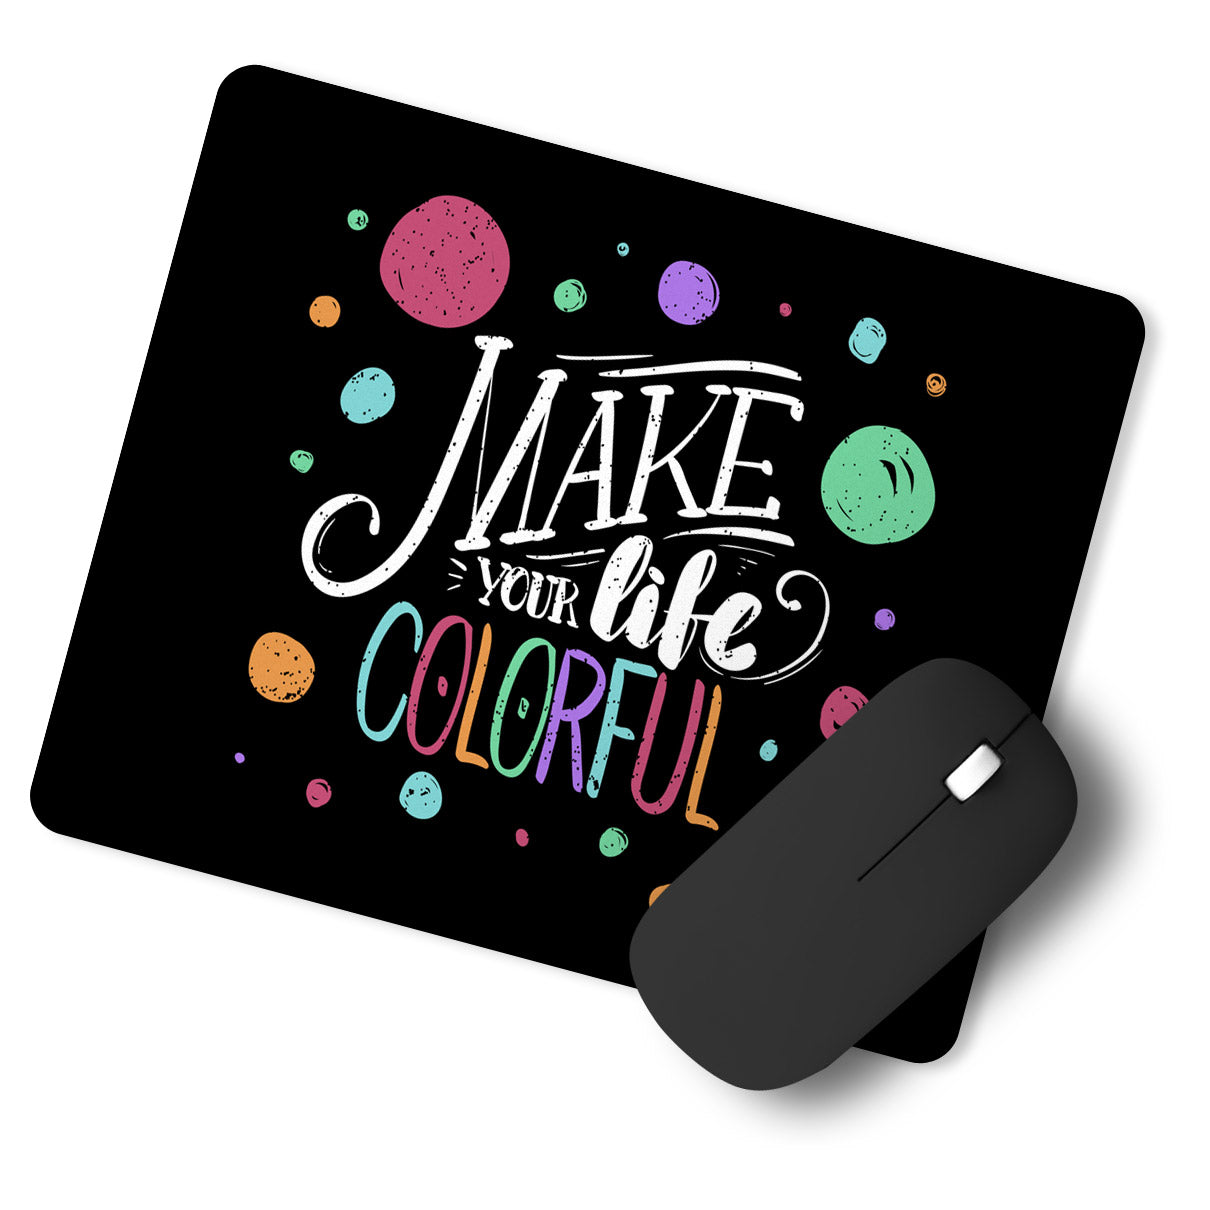 Colorful Life Quotes Designer Printed Premium Mouse pad (9 in x 7.5 in)